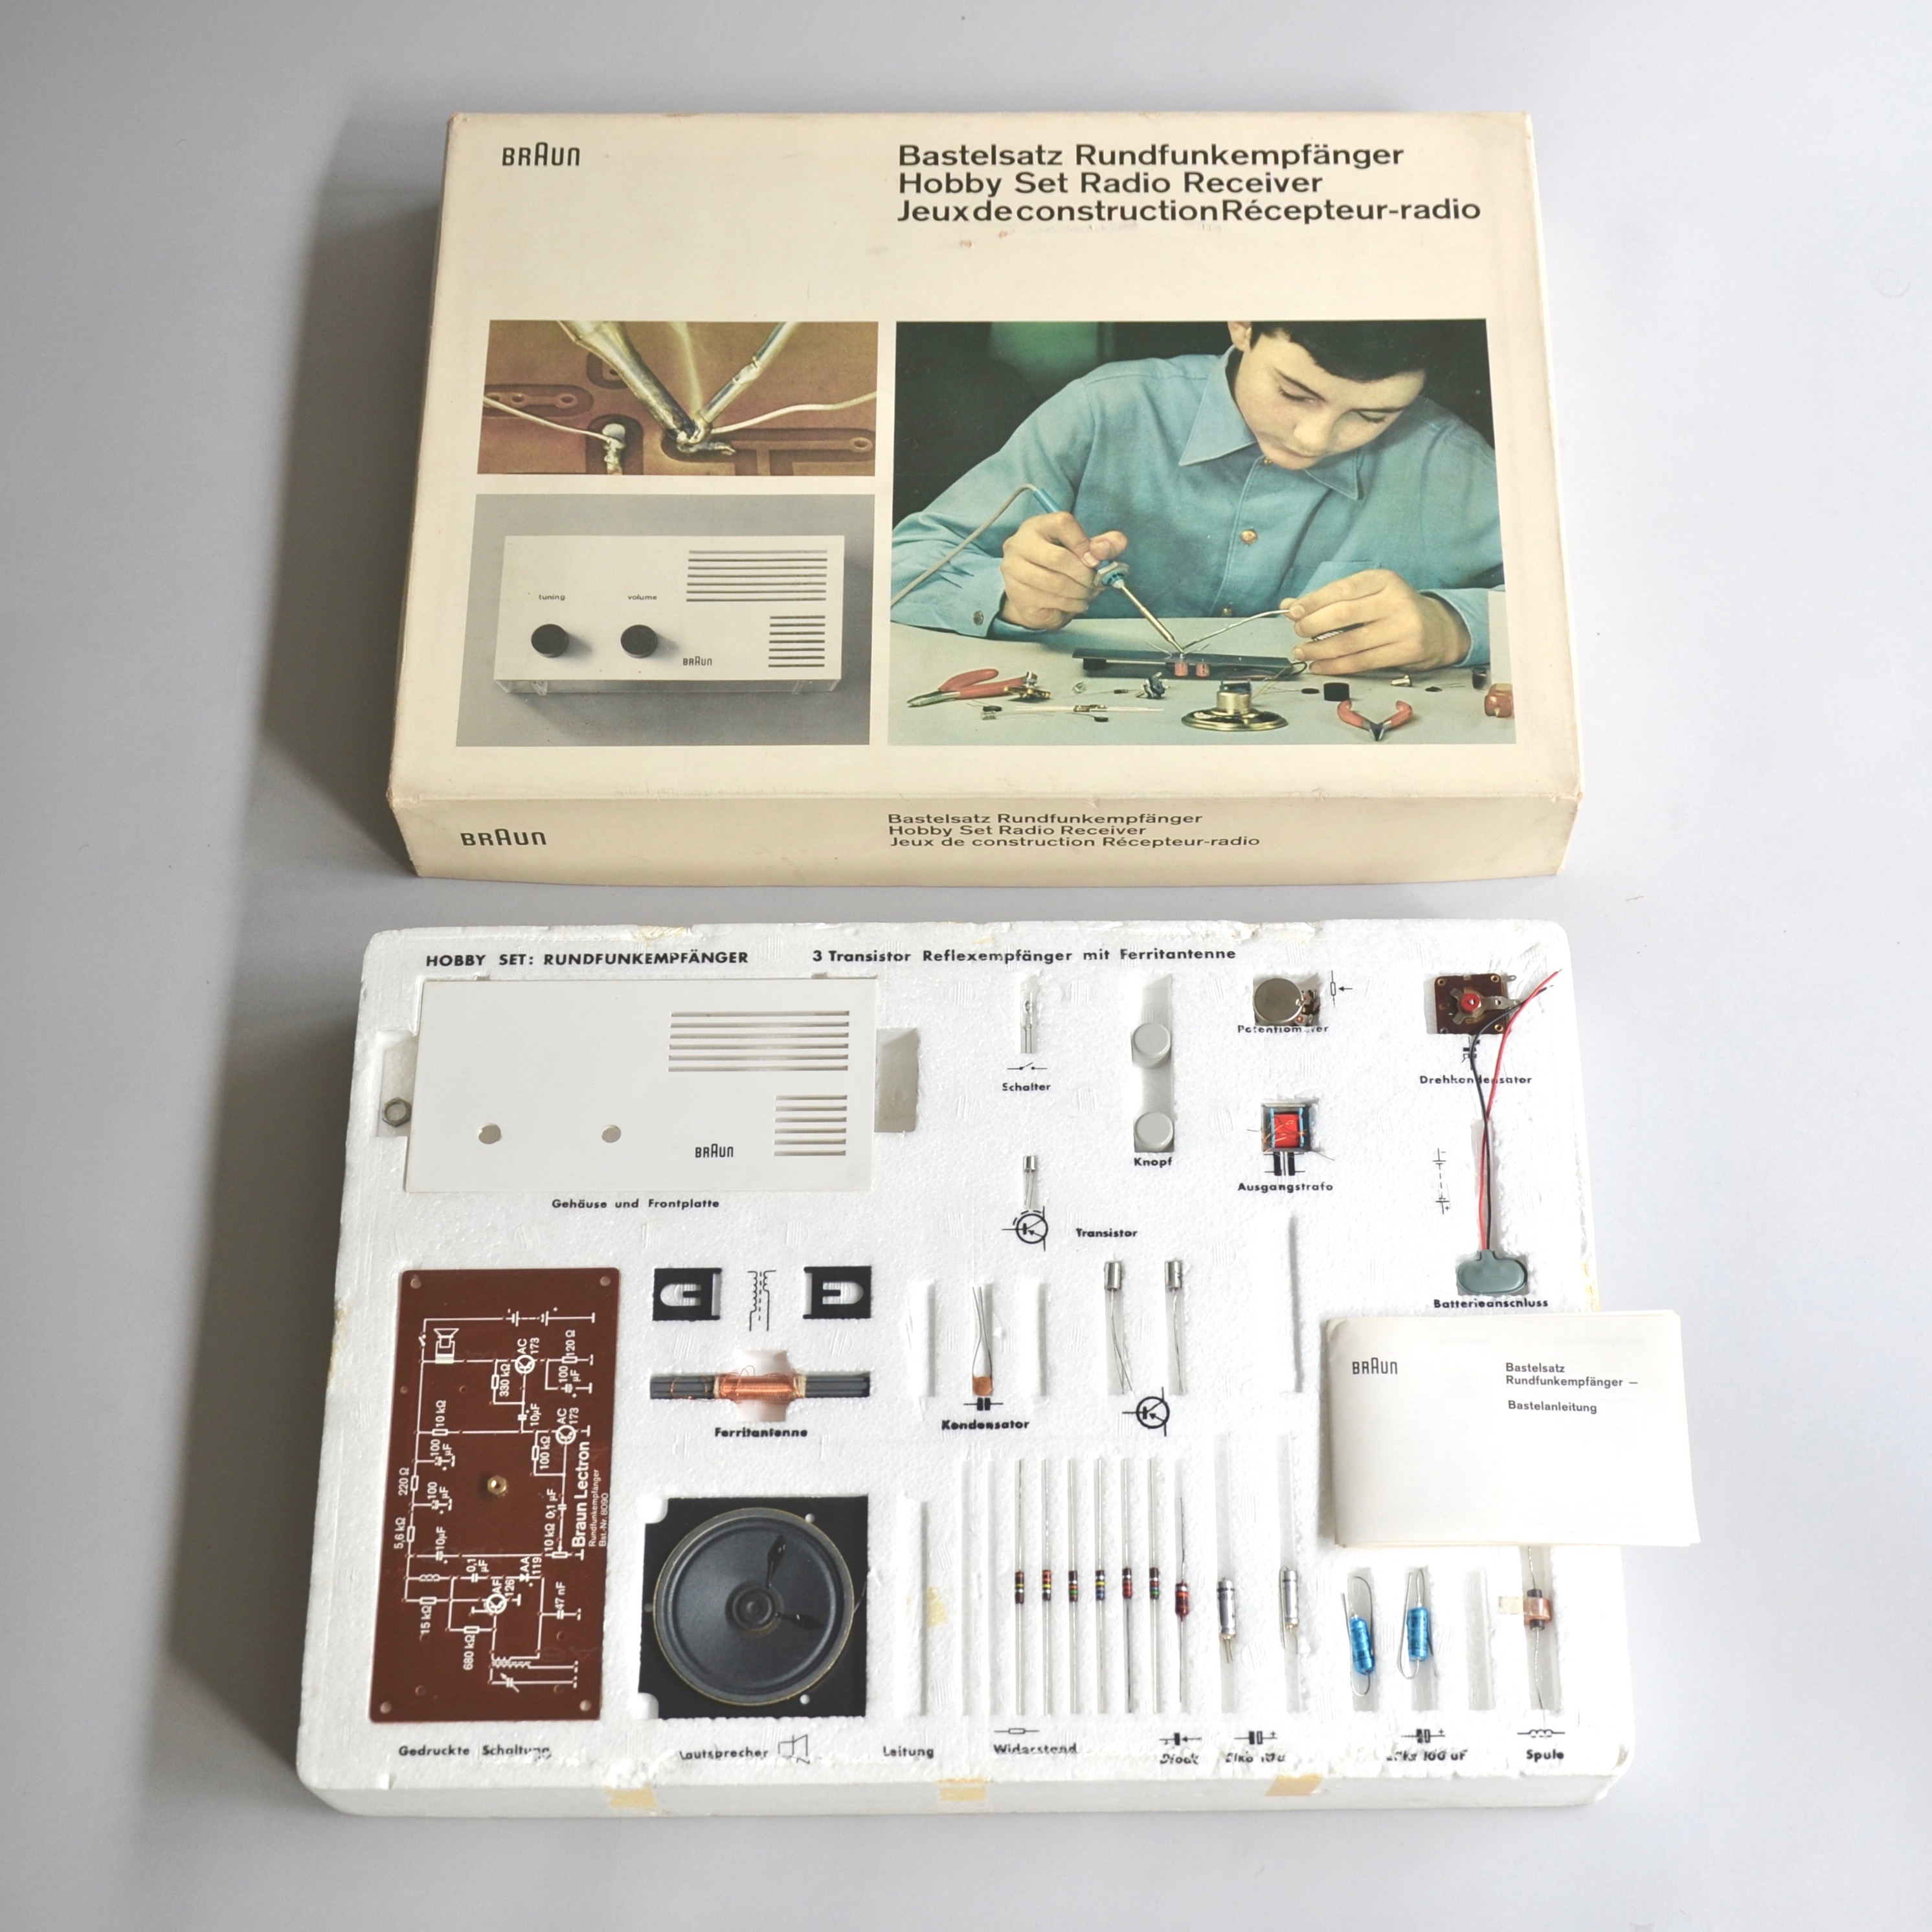 The hobby set radio receiver design by Dieter Rams and Jürgen Greubel, 1967. Photo: http://dasprogramm.co.uk/